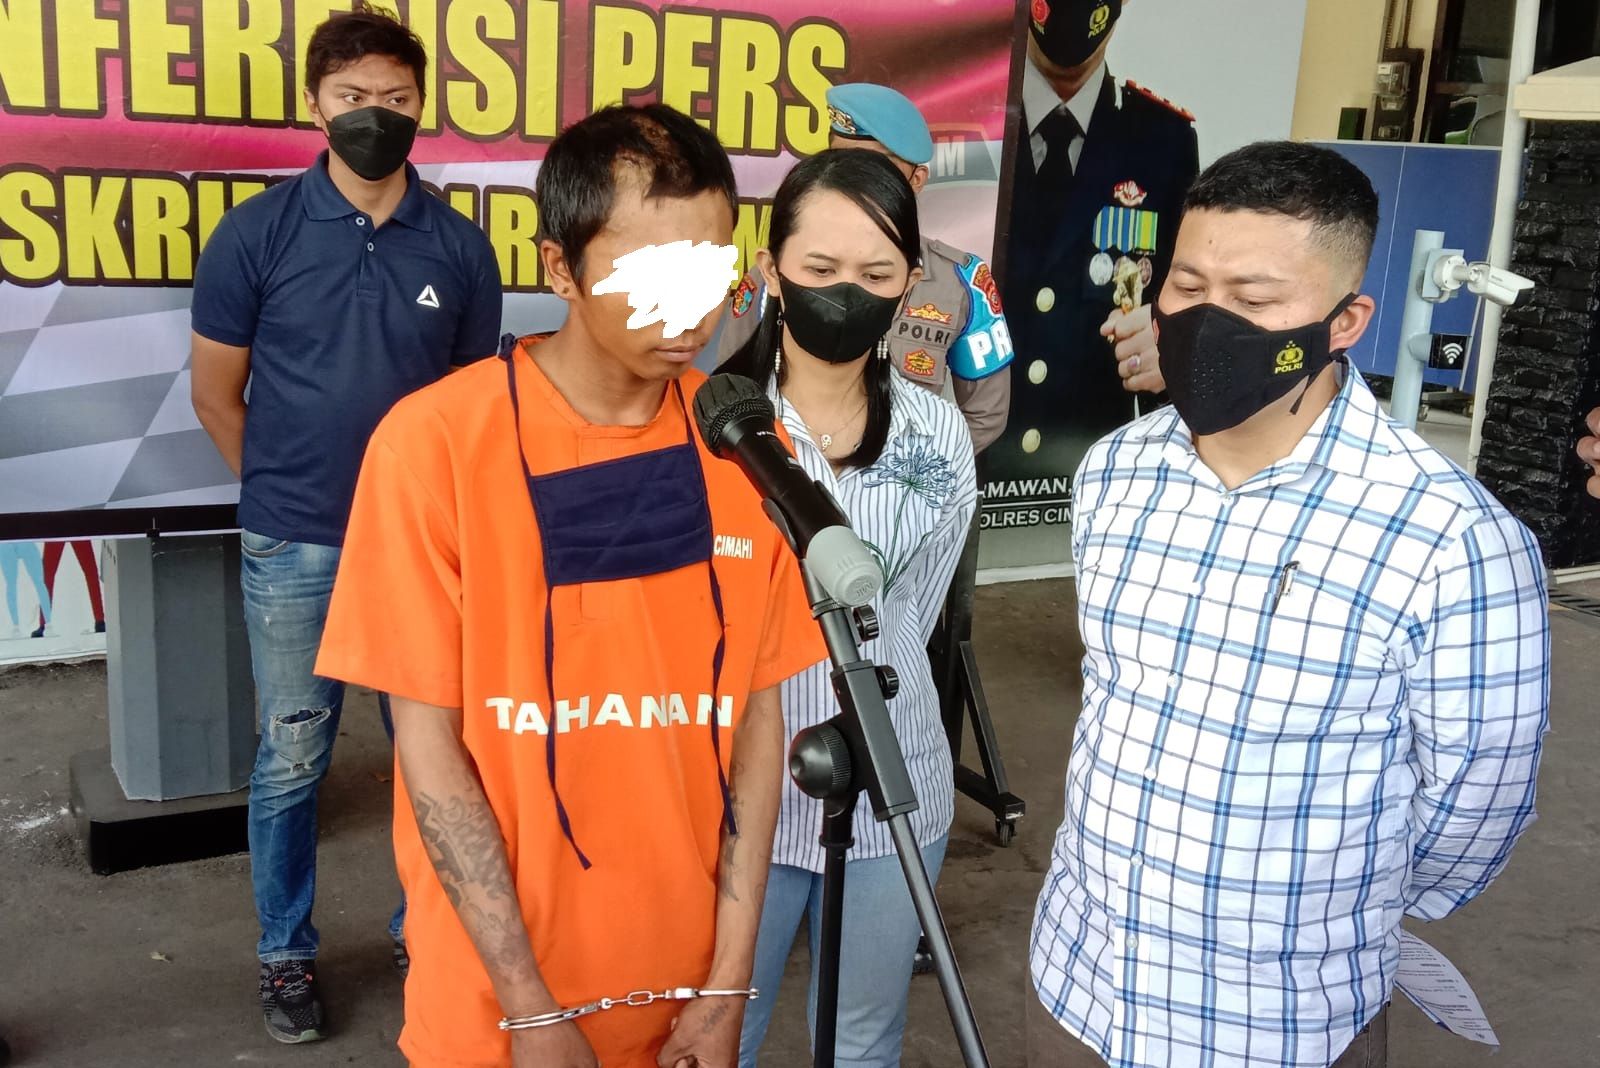 Terduga pelaku kasus pencabulan anak ditangkap Polres Cimahi, Sabtu 30 Juli 2022.